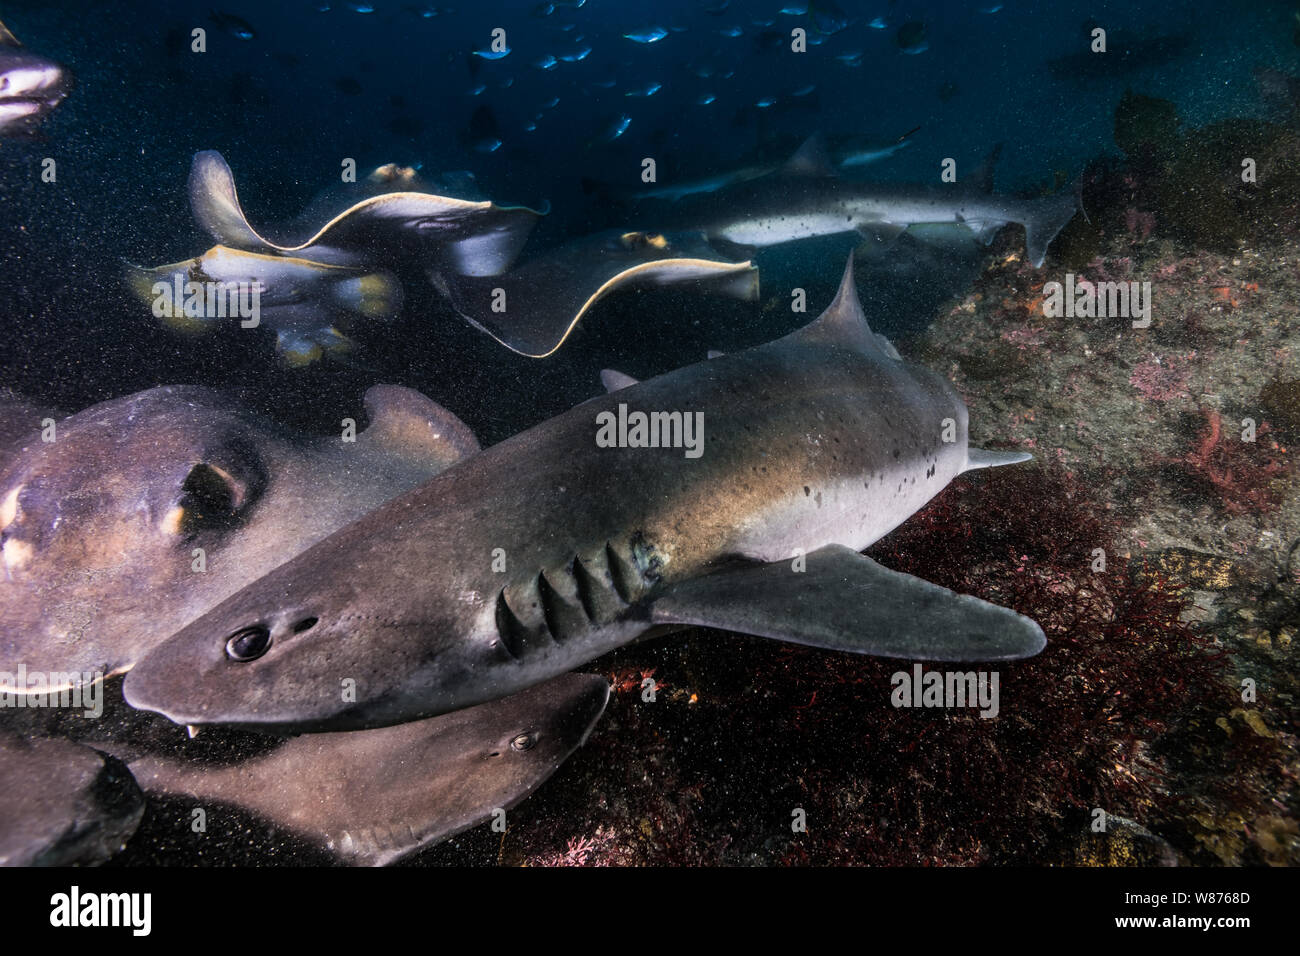 The mob of Banded Hound Sharks and Japanese stingrays rushing to the bait. Japan. Ito, Tateyama, Chiba, Japan (close-up) Stock Photo